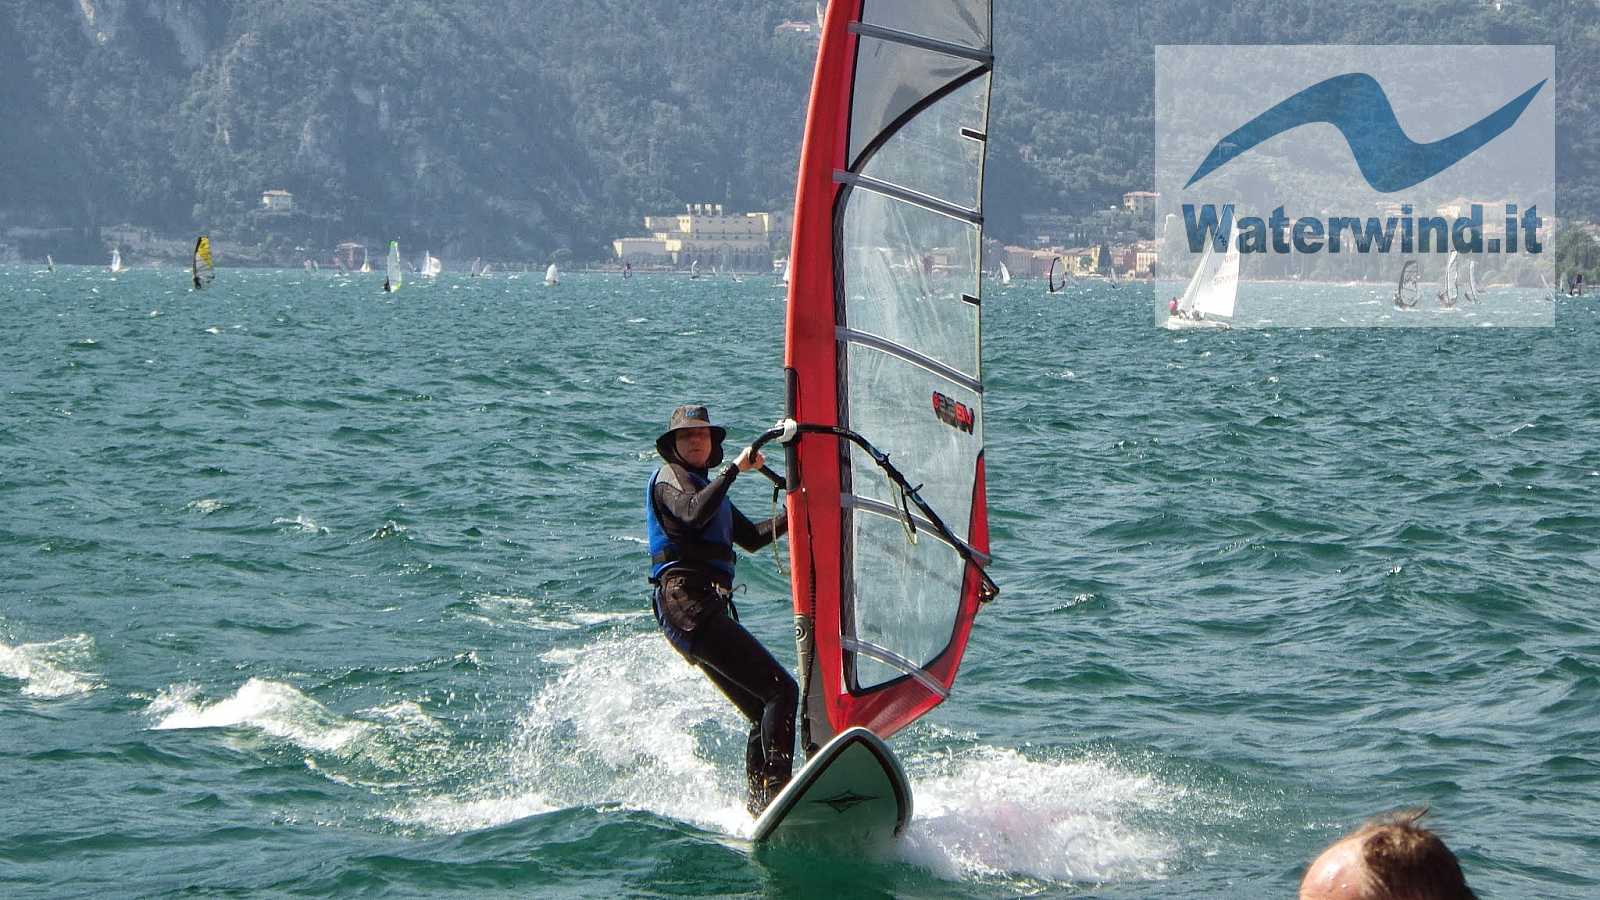 Torbole (Lake Garda), August 2013